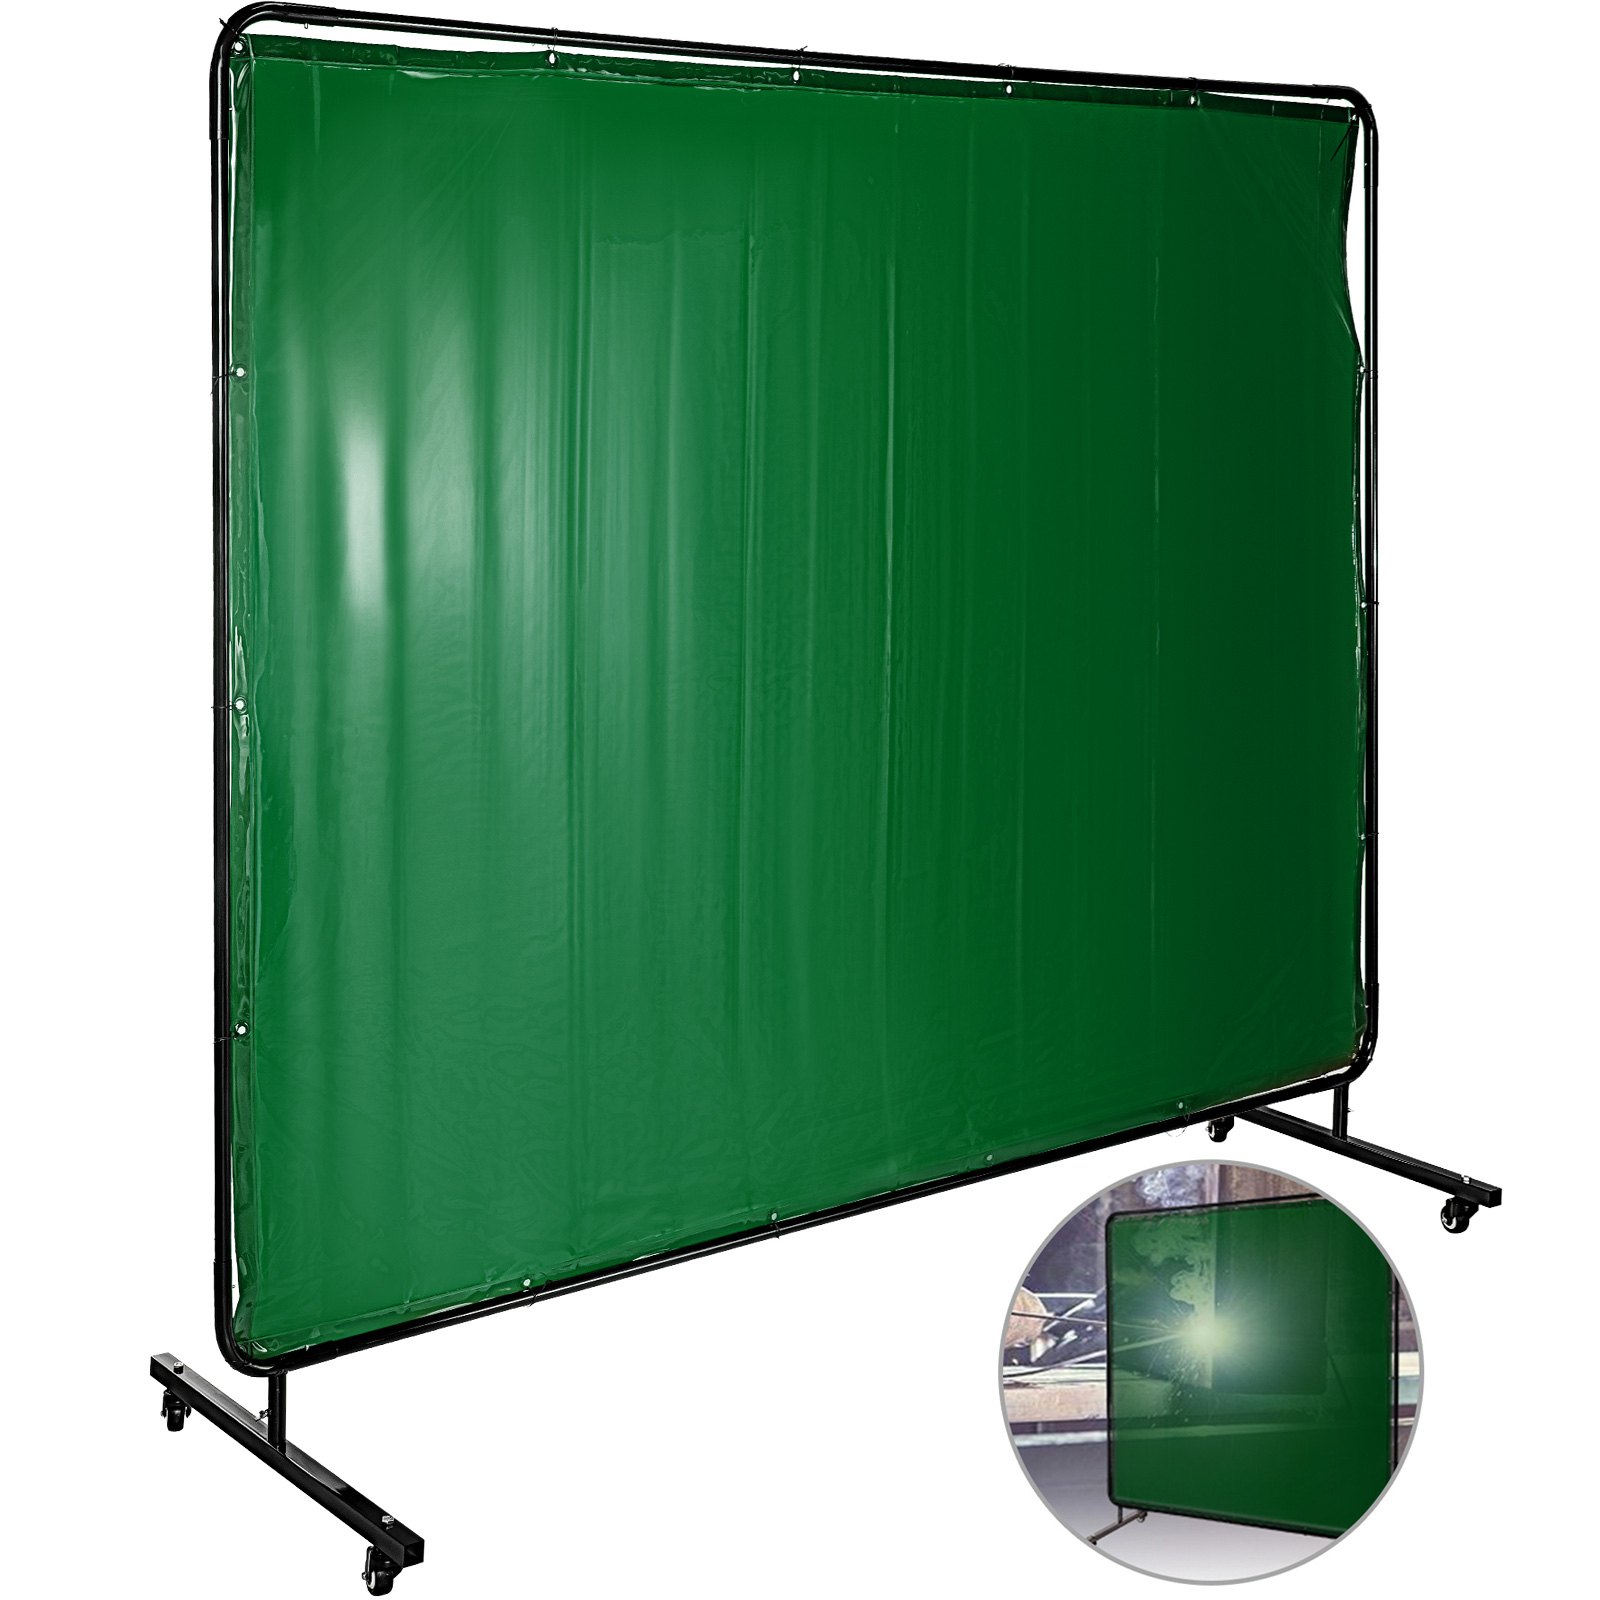 Welding Curtain Welding Screens&nbsp6' x 8' Flame Retardant Vinyl with Frame Green от Vevor Many GEOs